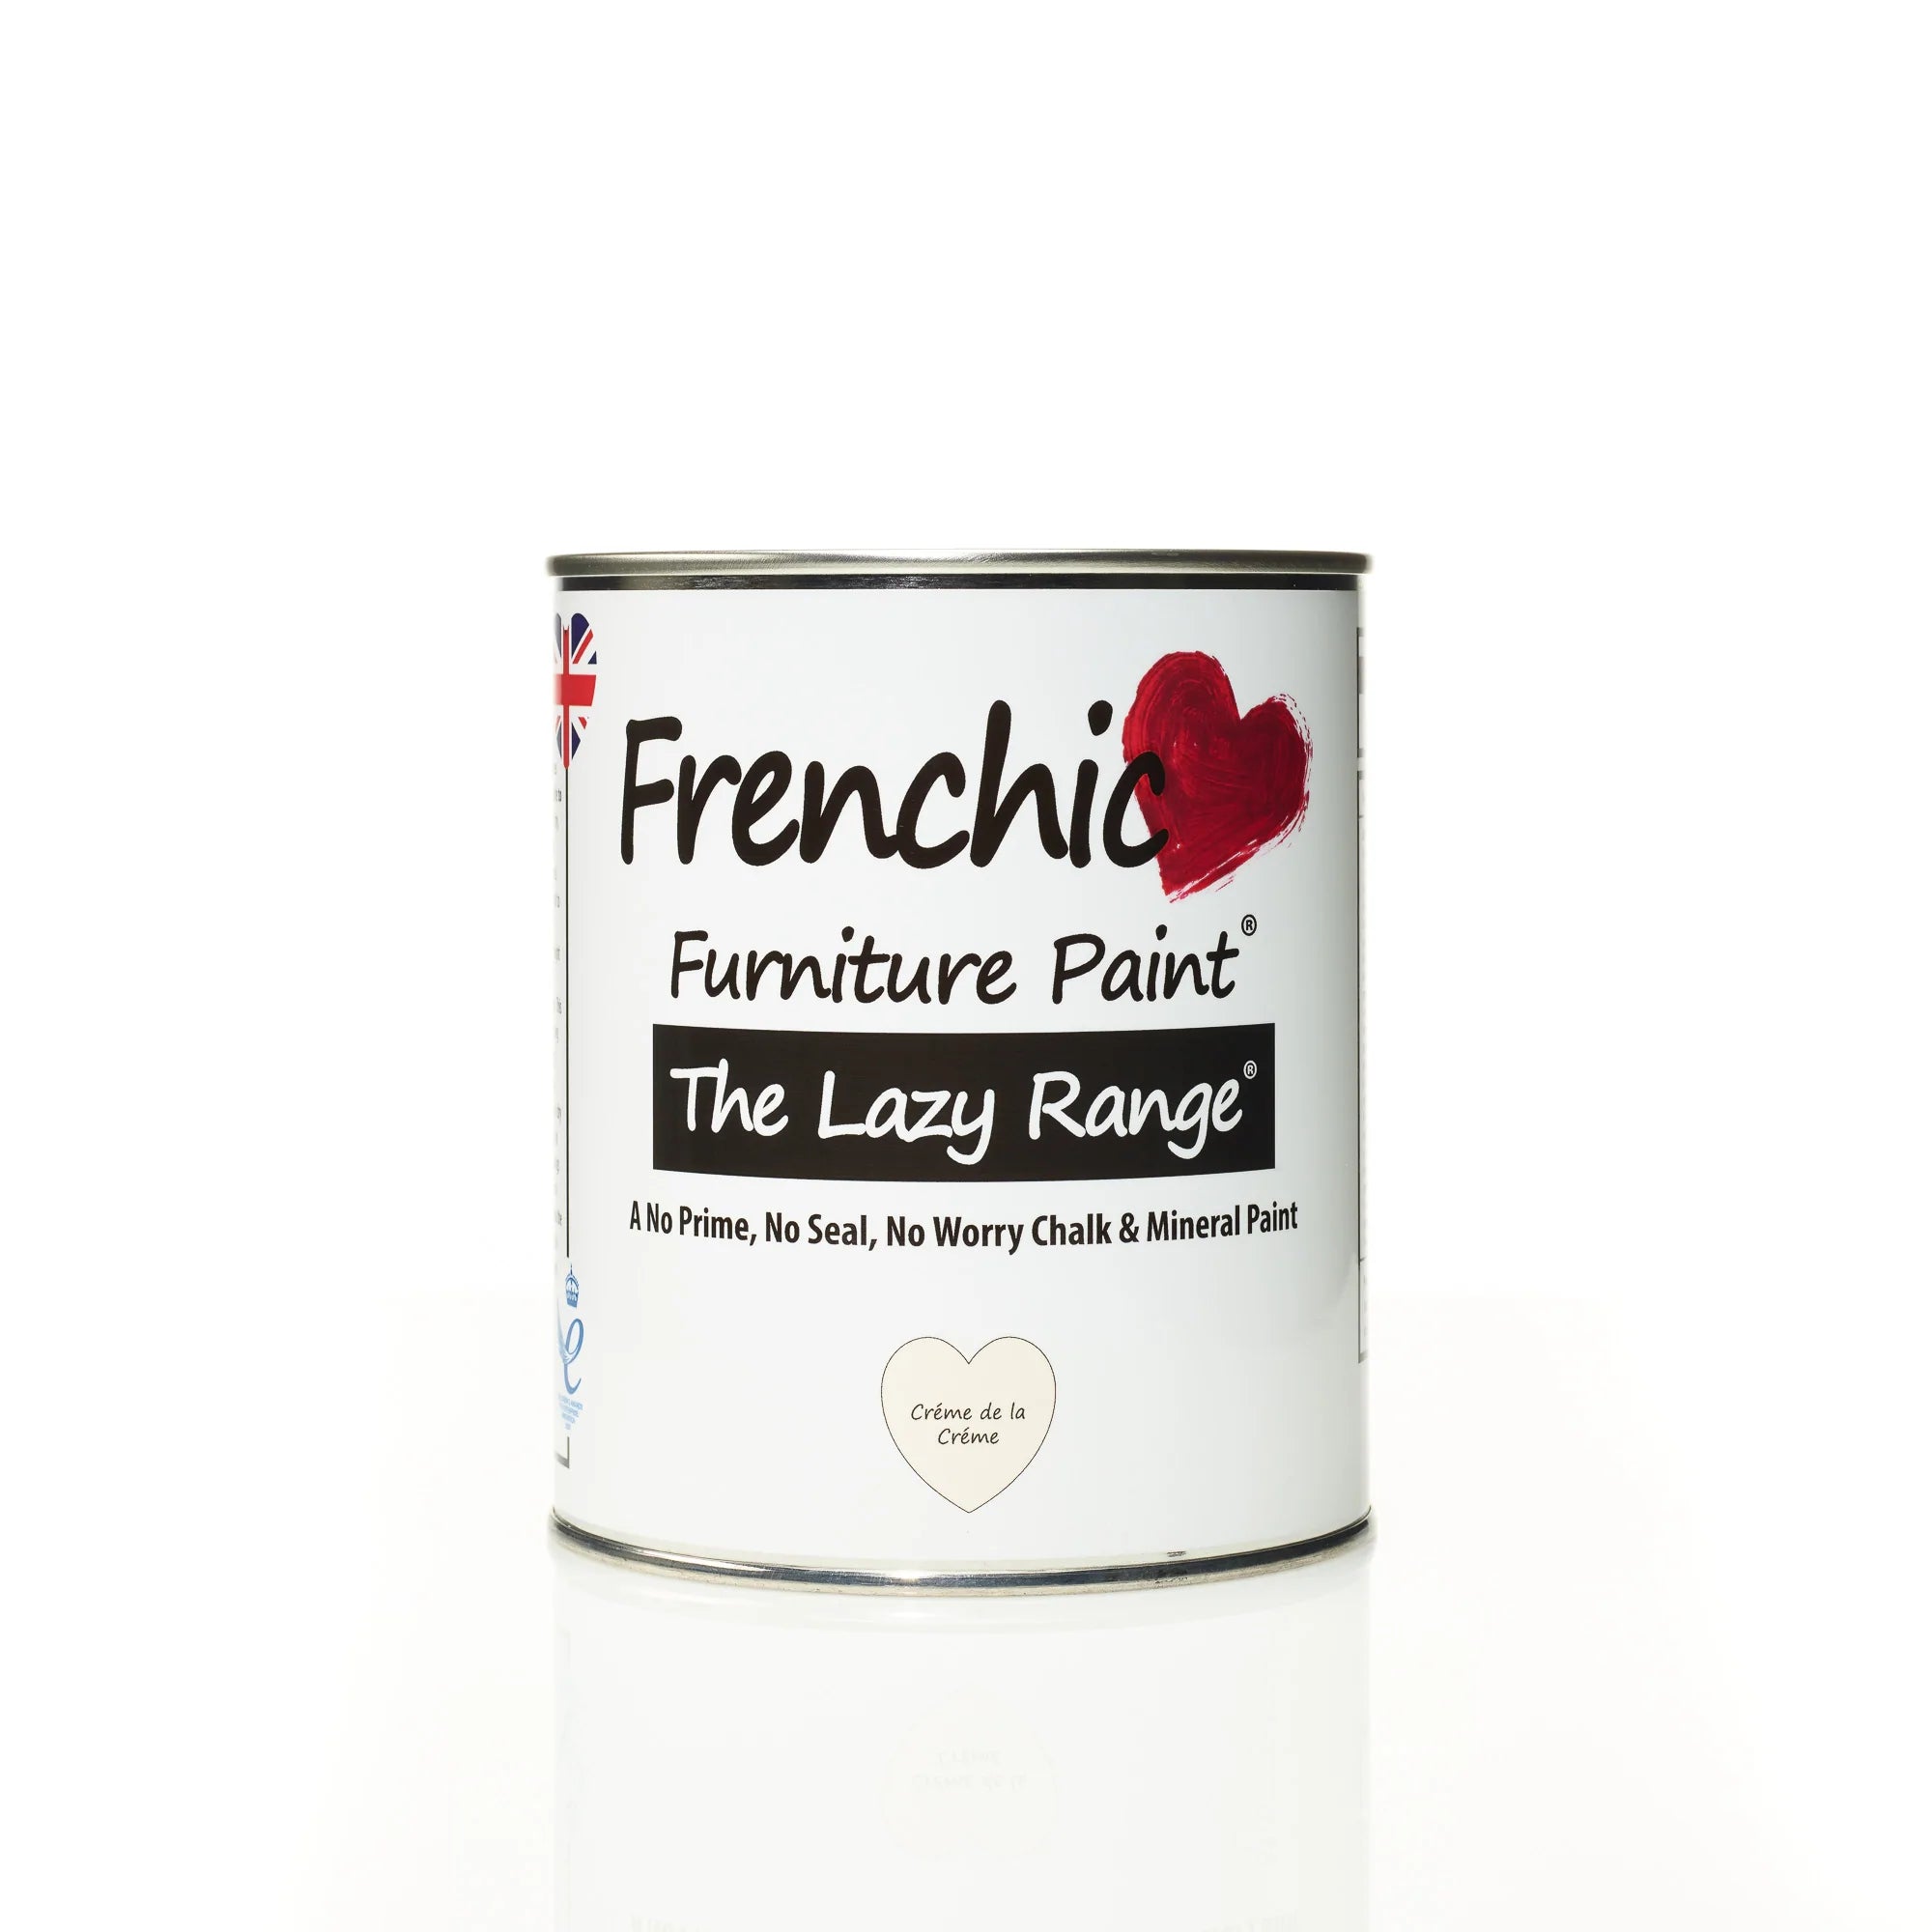 Frenchic Paint | Lazy Range - Creme De La Creme by Weirs of Baggot St